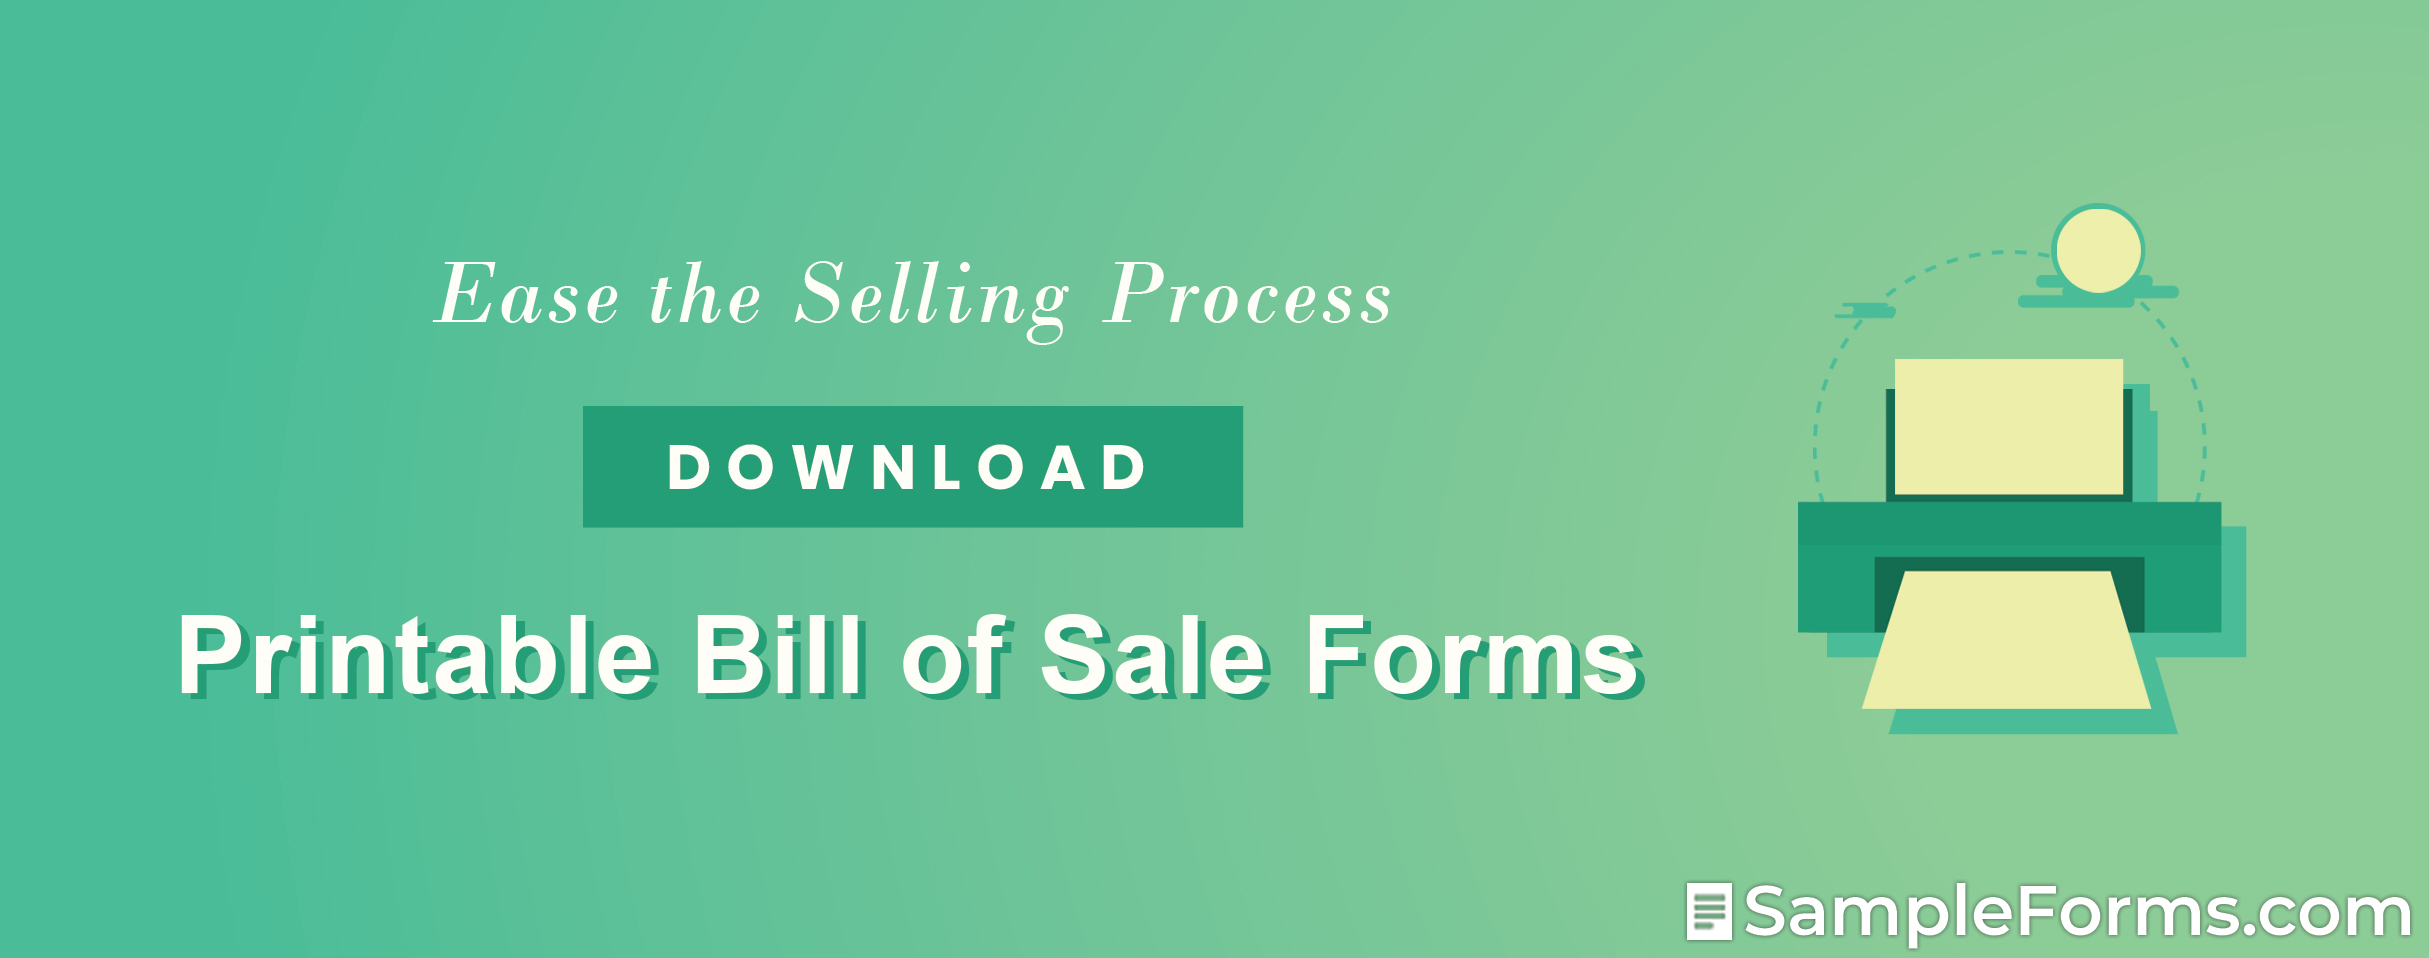 Printable Bill of Sale Form